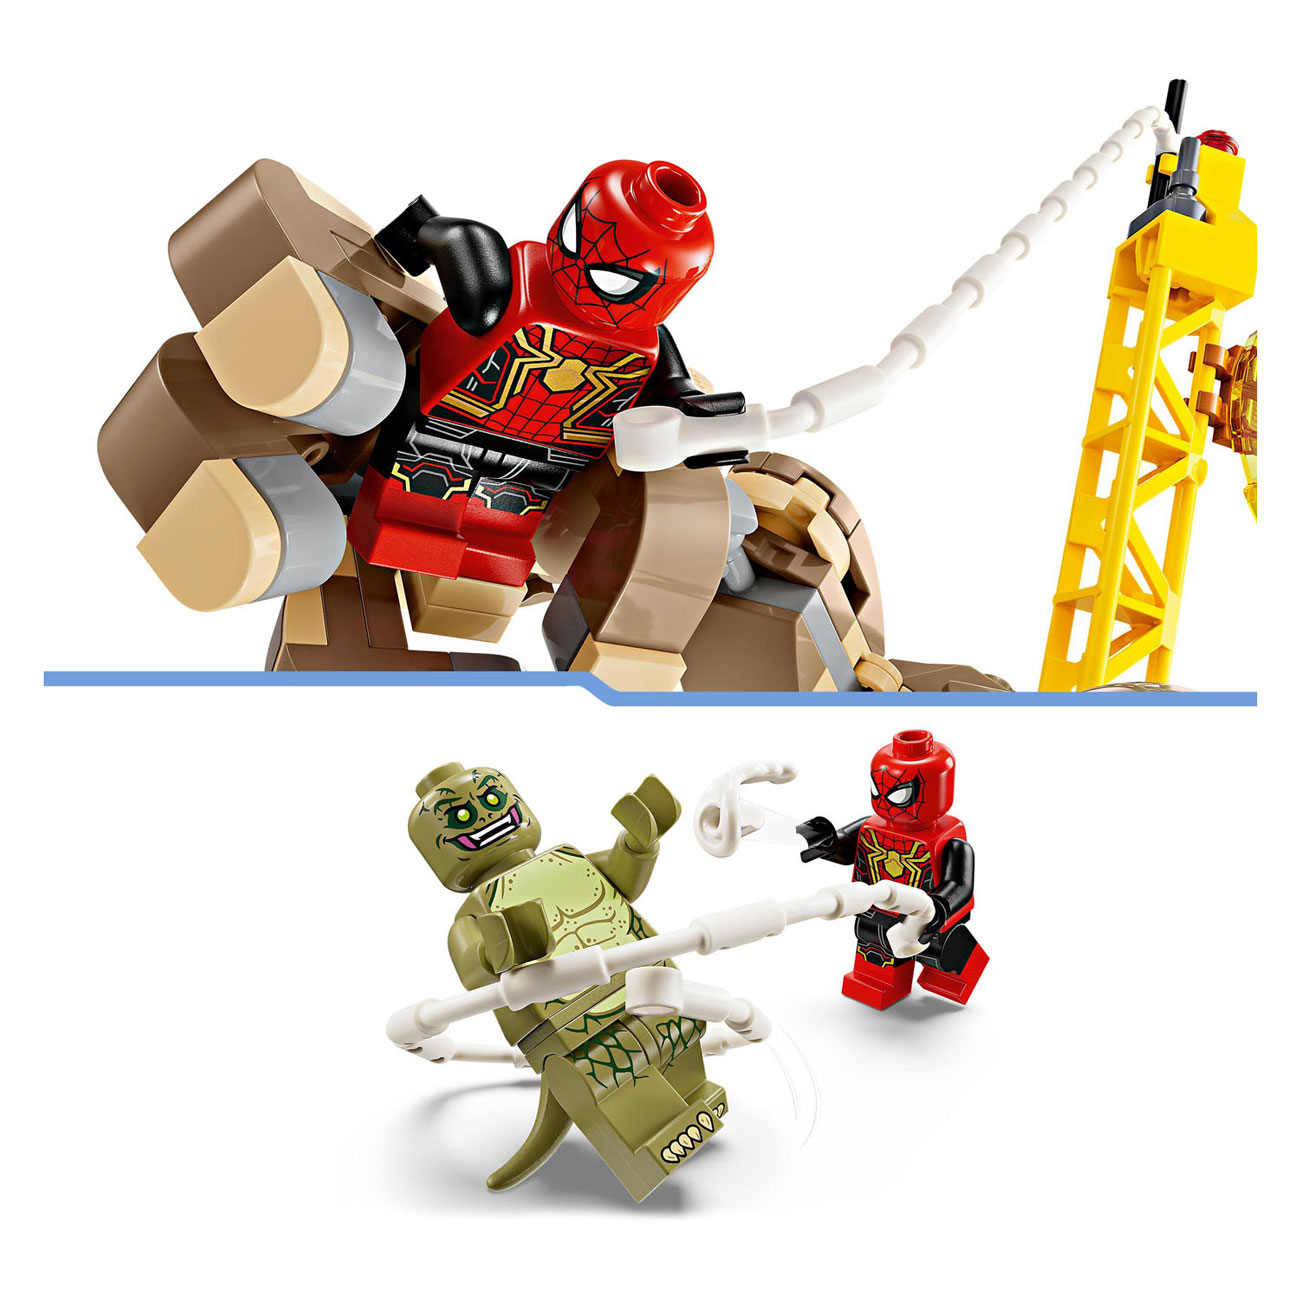 LEGO Super Heroes 76280 Spider-Man vs. Sandman: Eindstrijd